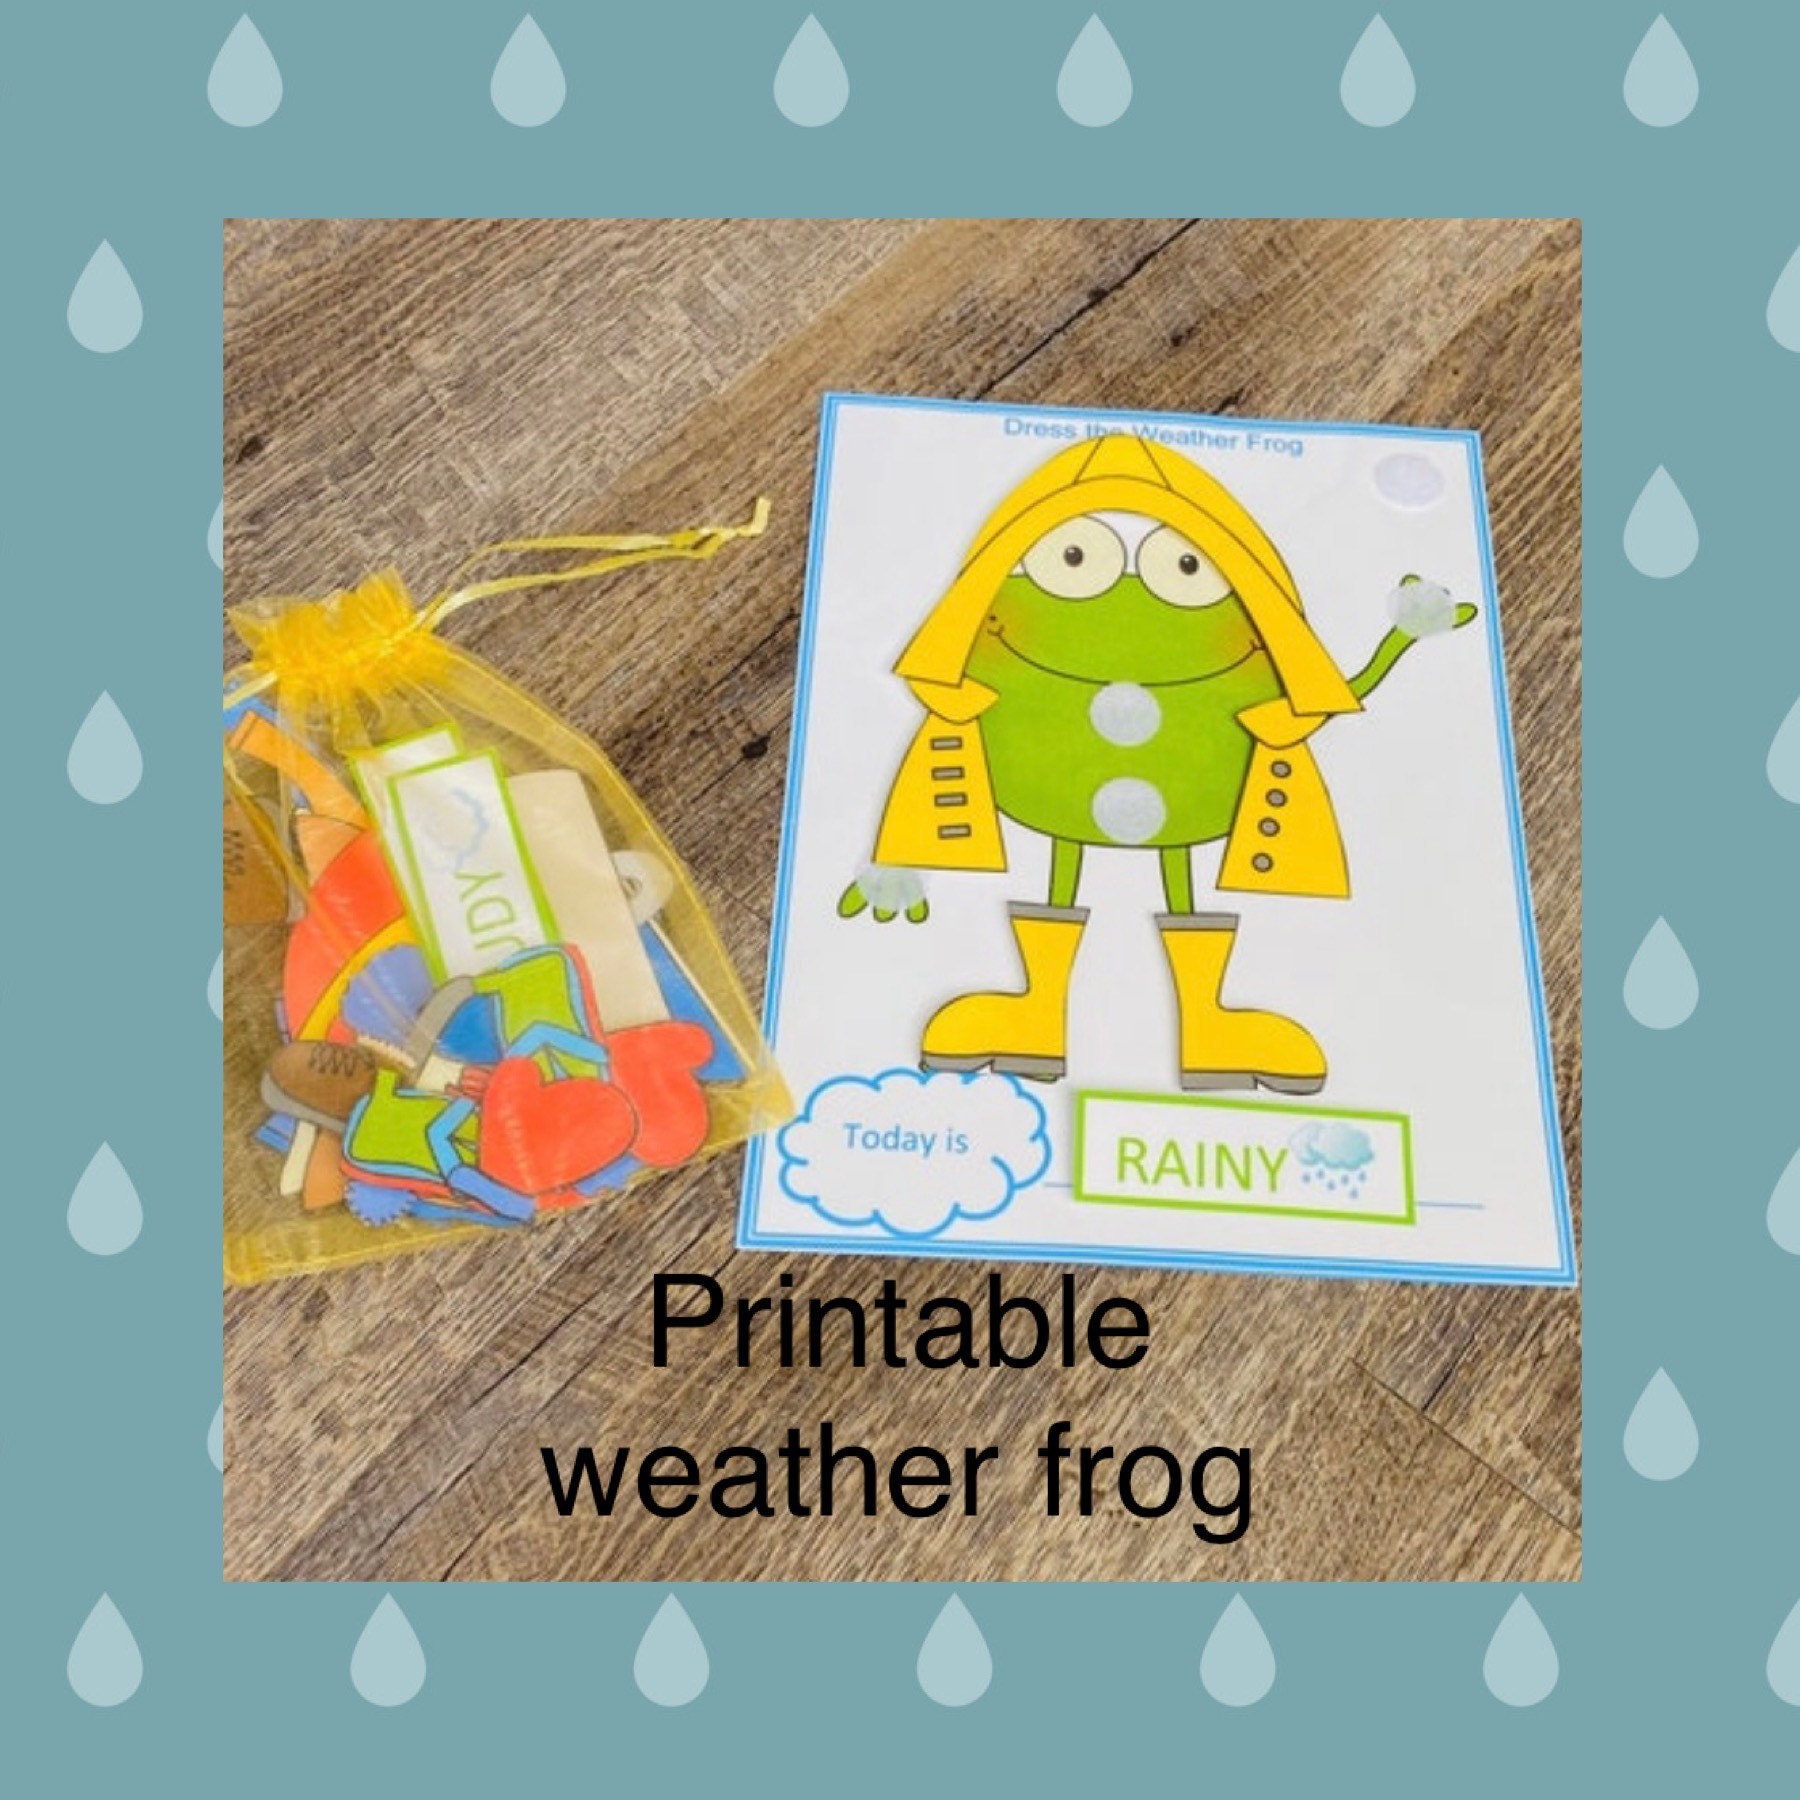 Die Cut Toad Sticker, Weather-proof Vinyl Frog Prince Sticker 